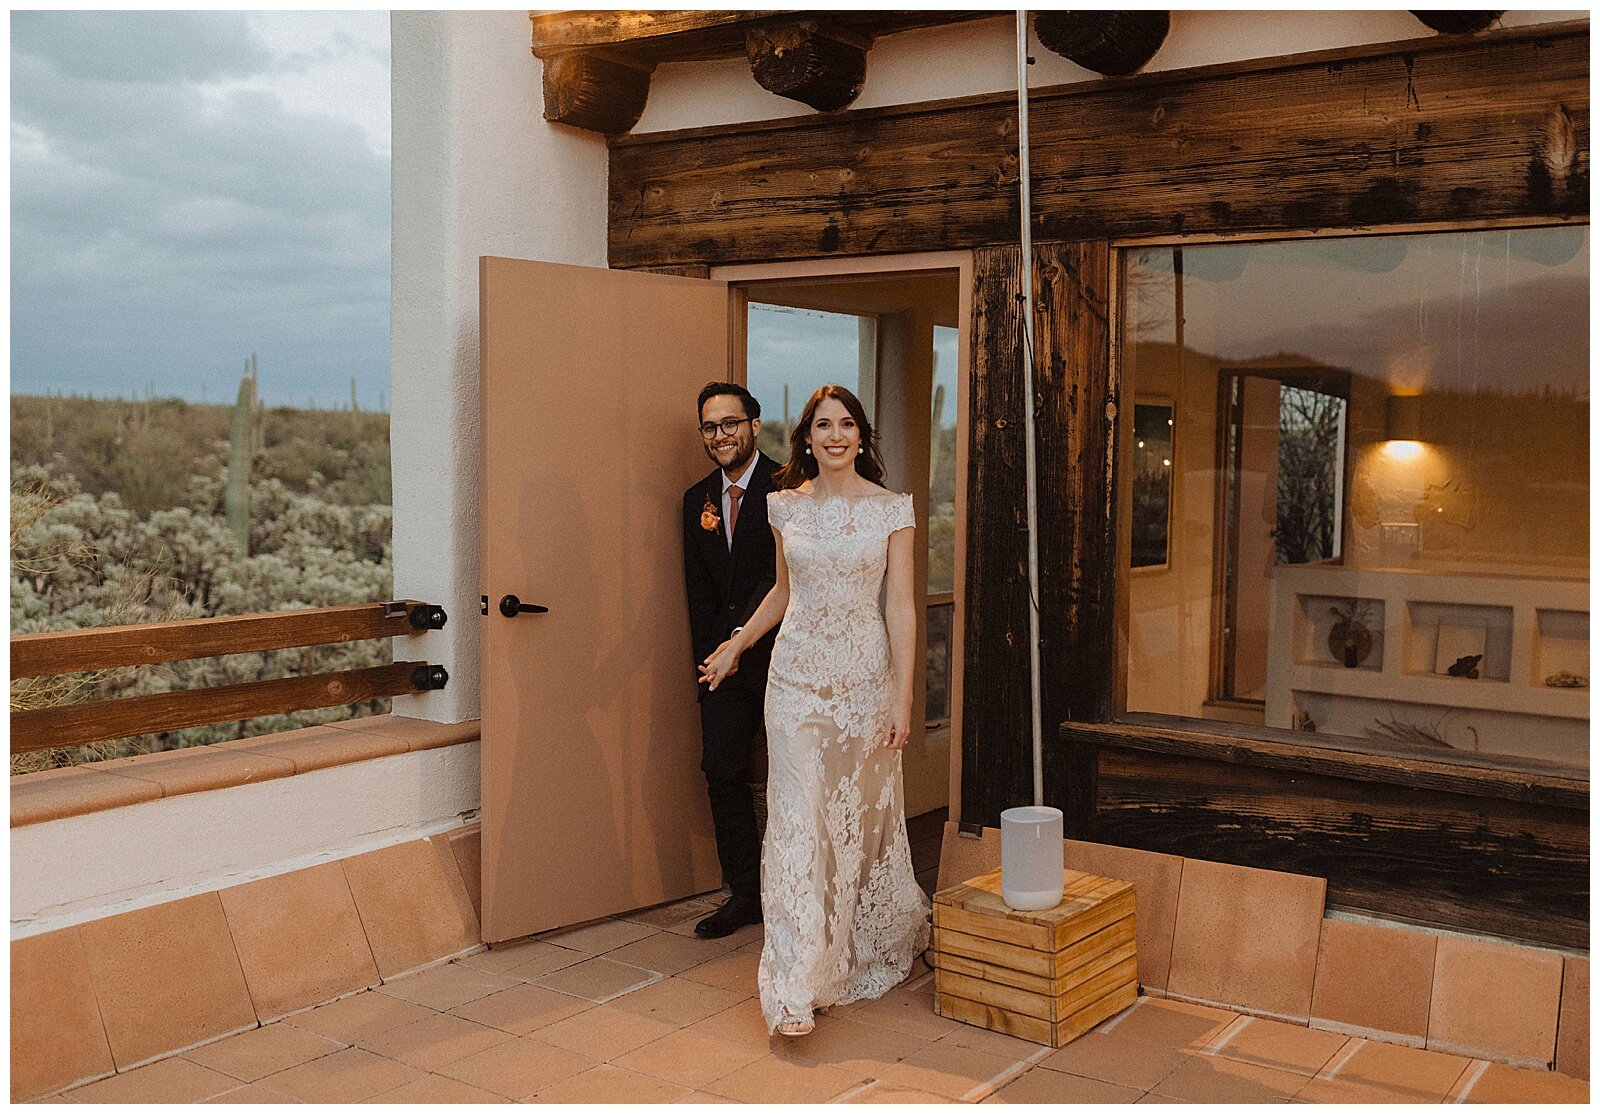 La Posada Saguaro National Park Wedding - Erika Greene Photography - Arizona Elopement Photographer_0065.jpg